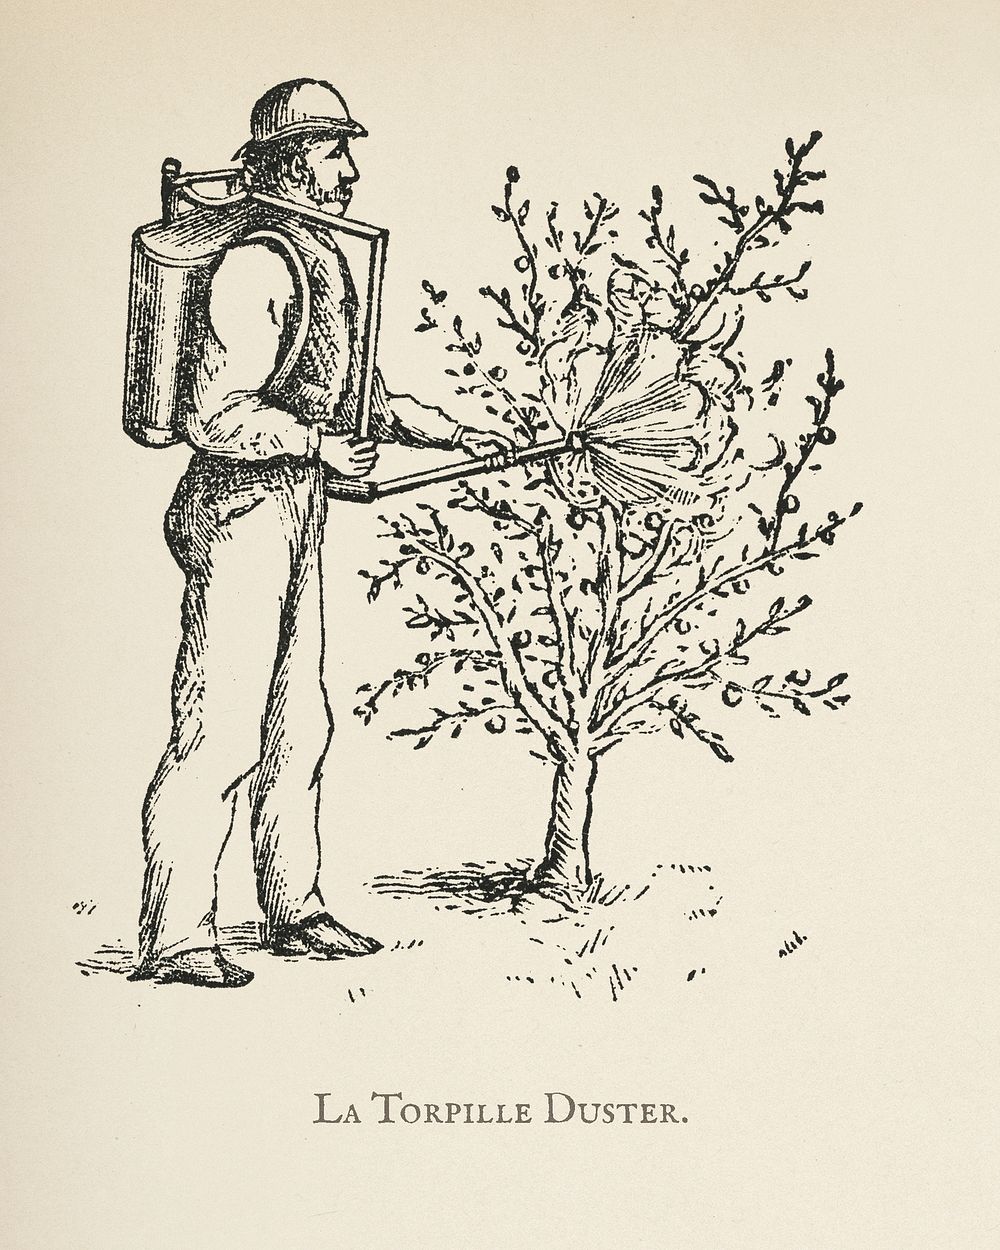  The fruit grower's guide  : Vintage illustration of la torpille duster